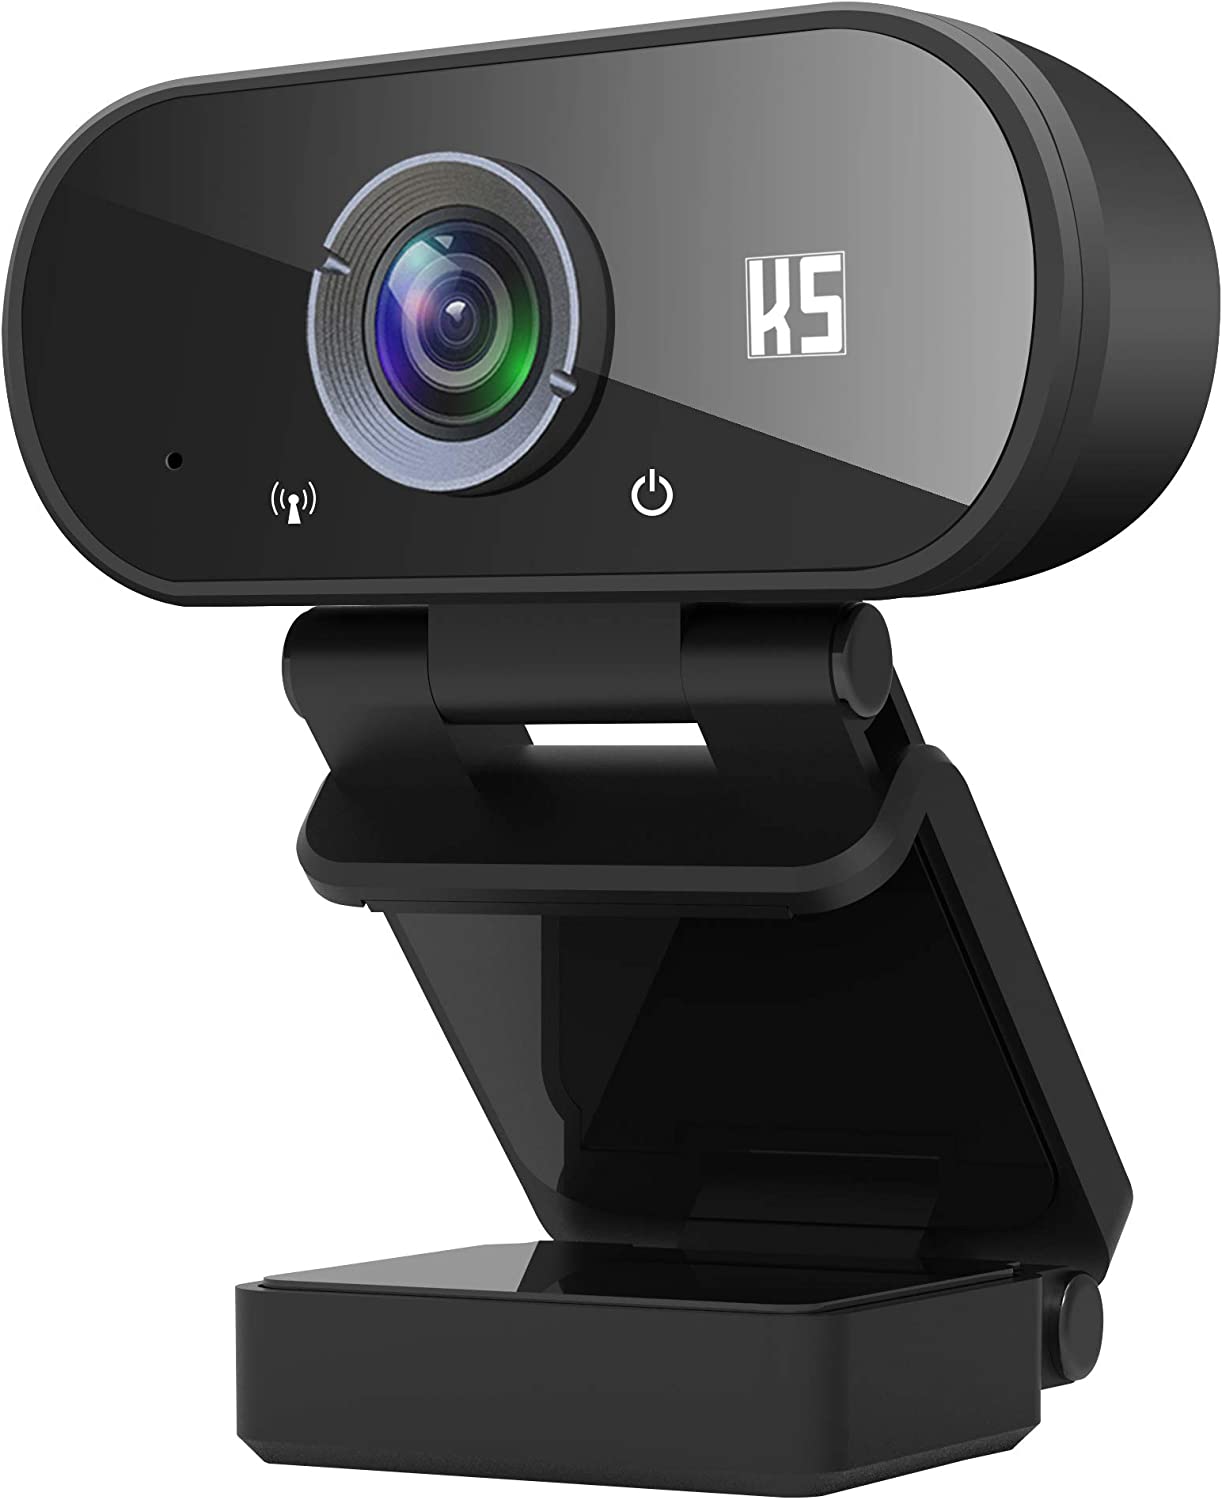 Konnek Stein Webcam HD 1080P 비디오 내장 마이크 삼각대 및 개인 정보 보호 커버가 있는 컴퓨터 USB 웹캠 플러그 앤 플레이 통화용 PC 회의 데스크톱과 호환 노트북